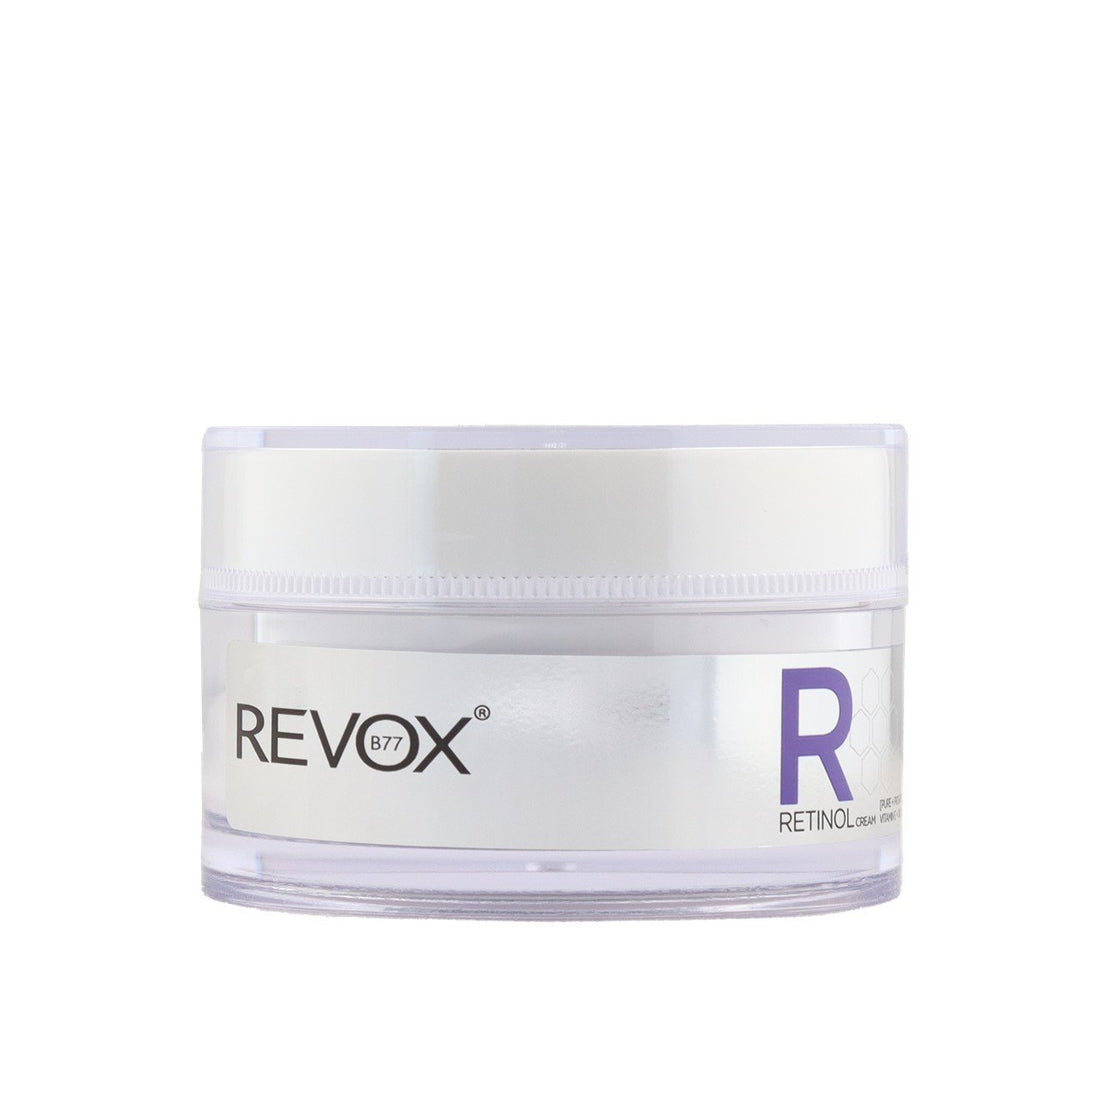 Revox B77 Retinol Daily Protection Cream SPF20 50ml